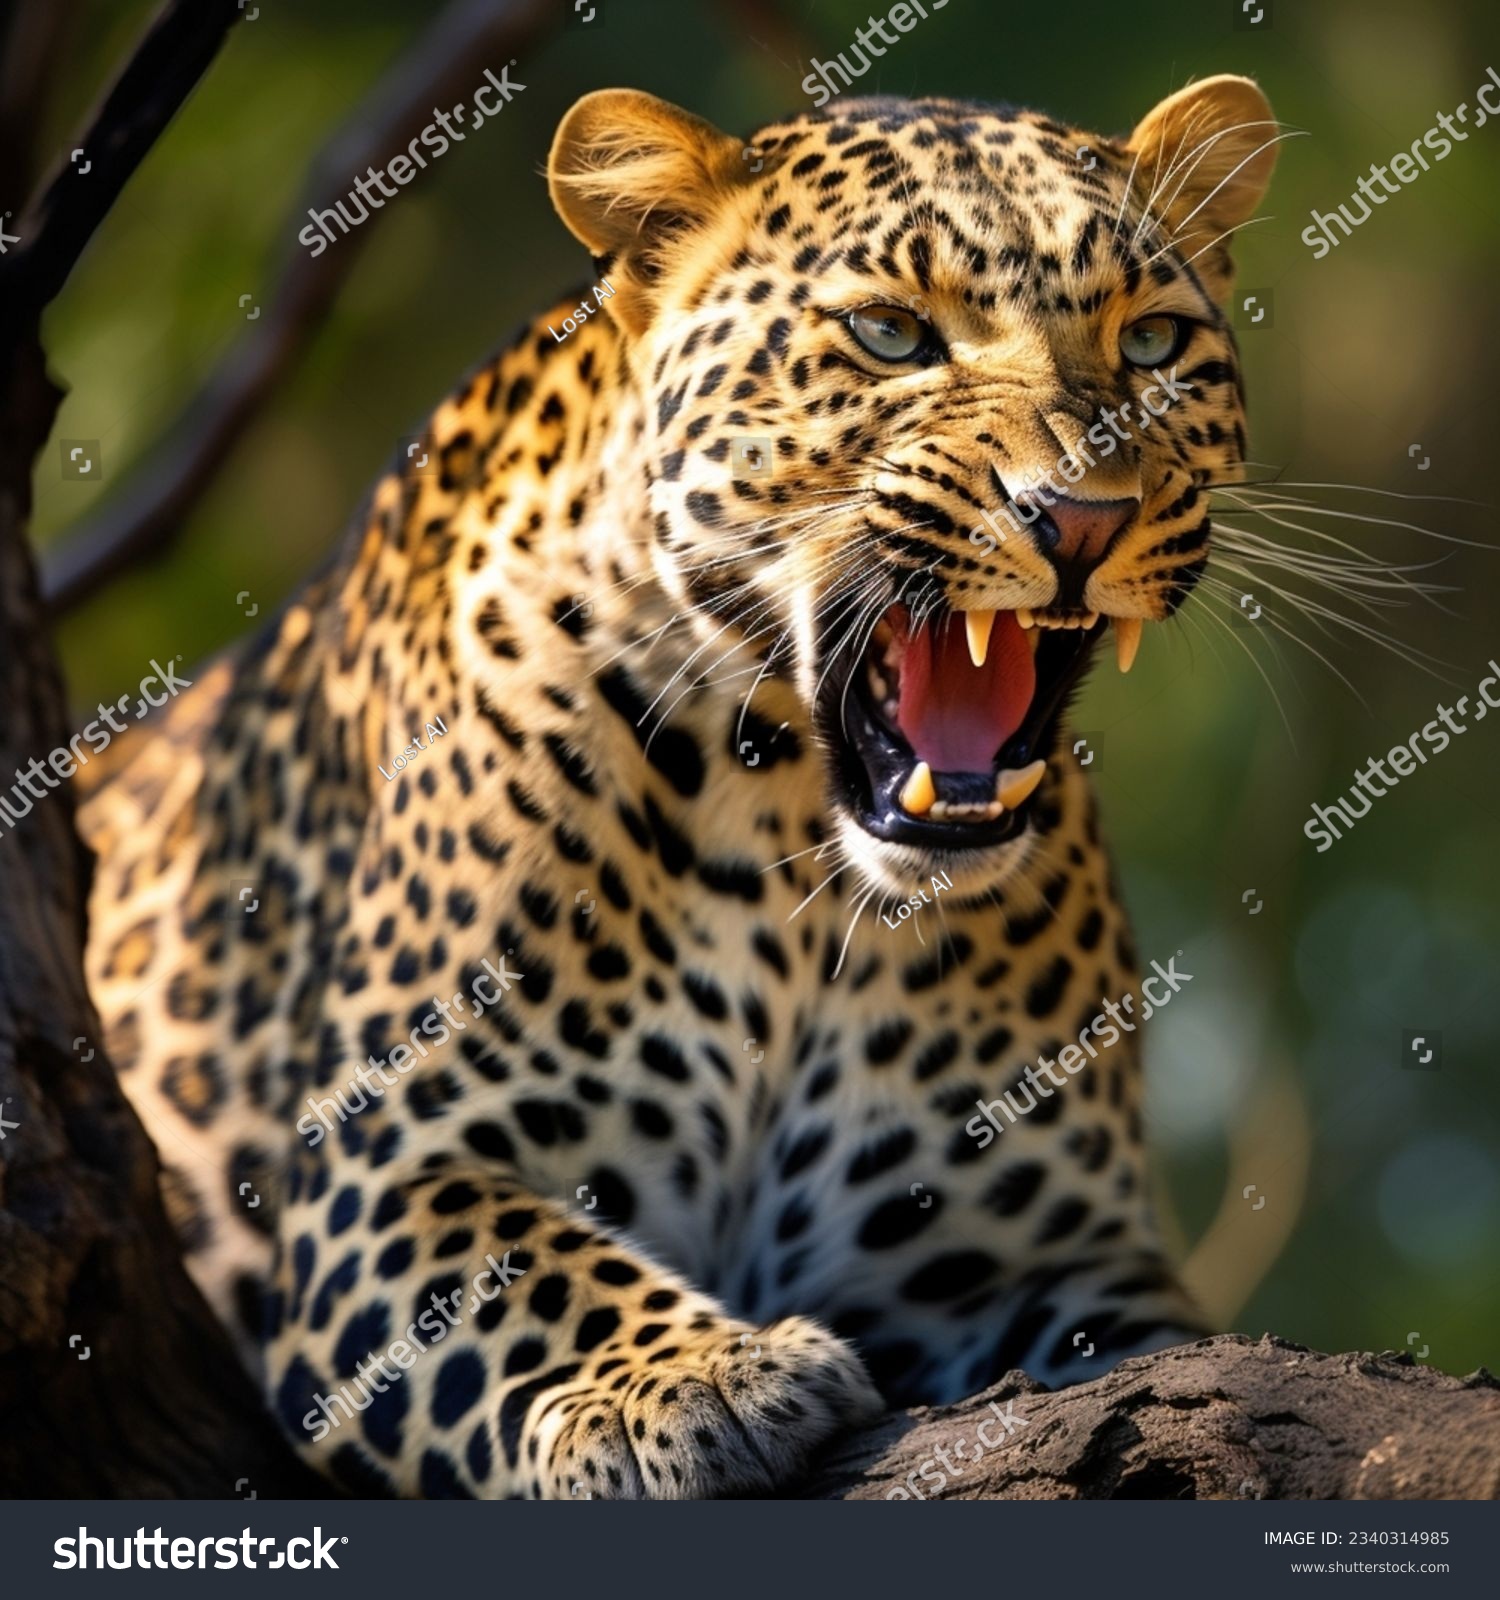 Leopard's Grace: Roaring from Above #2340314985